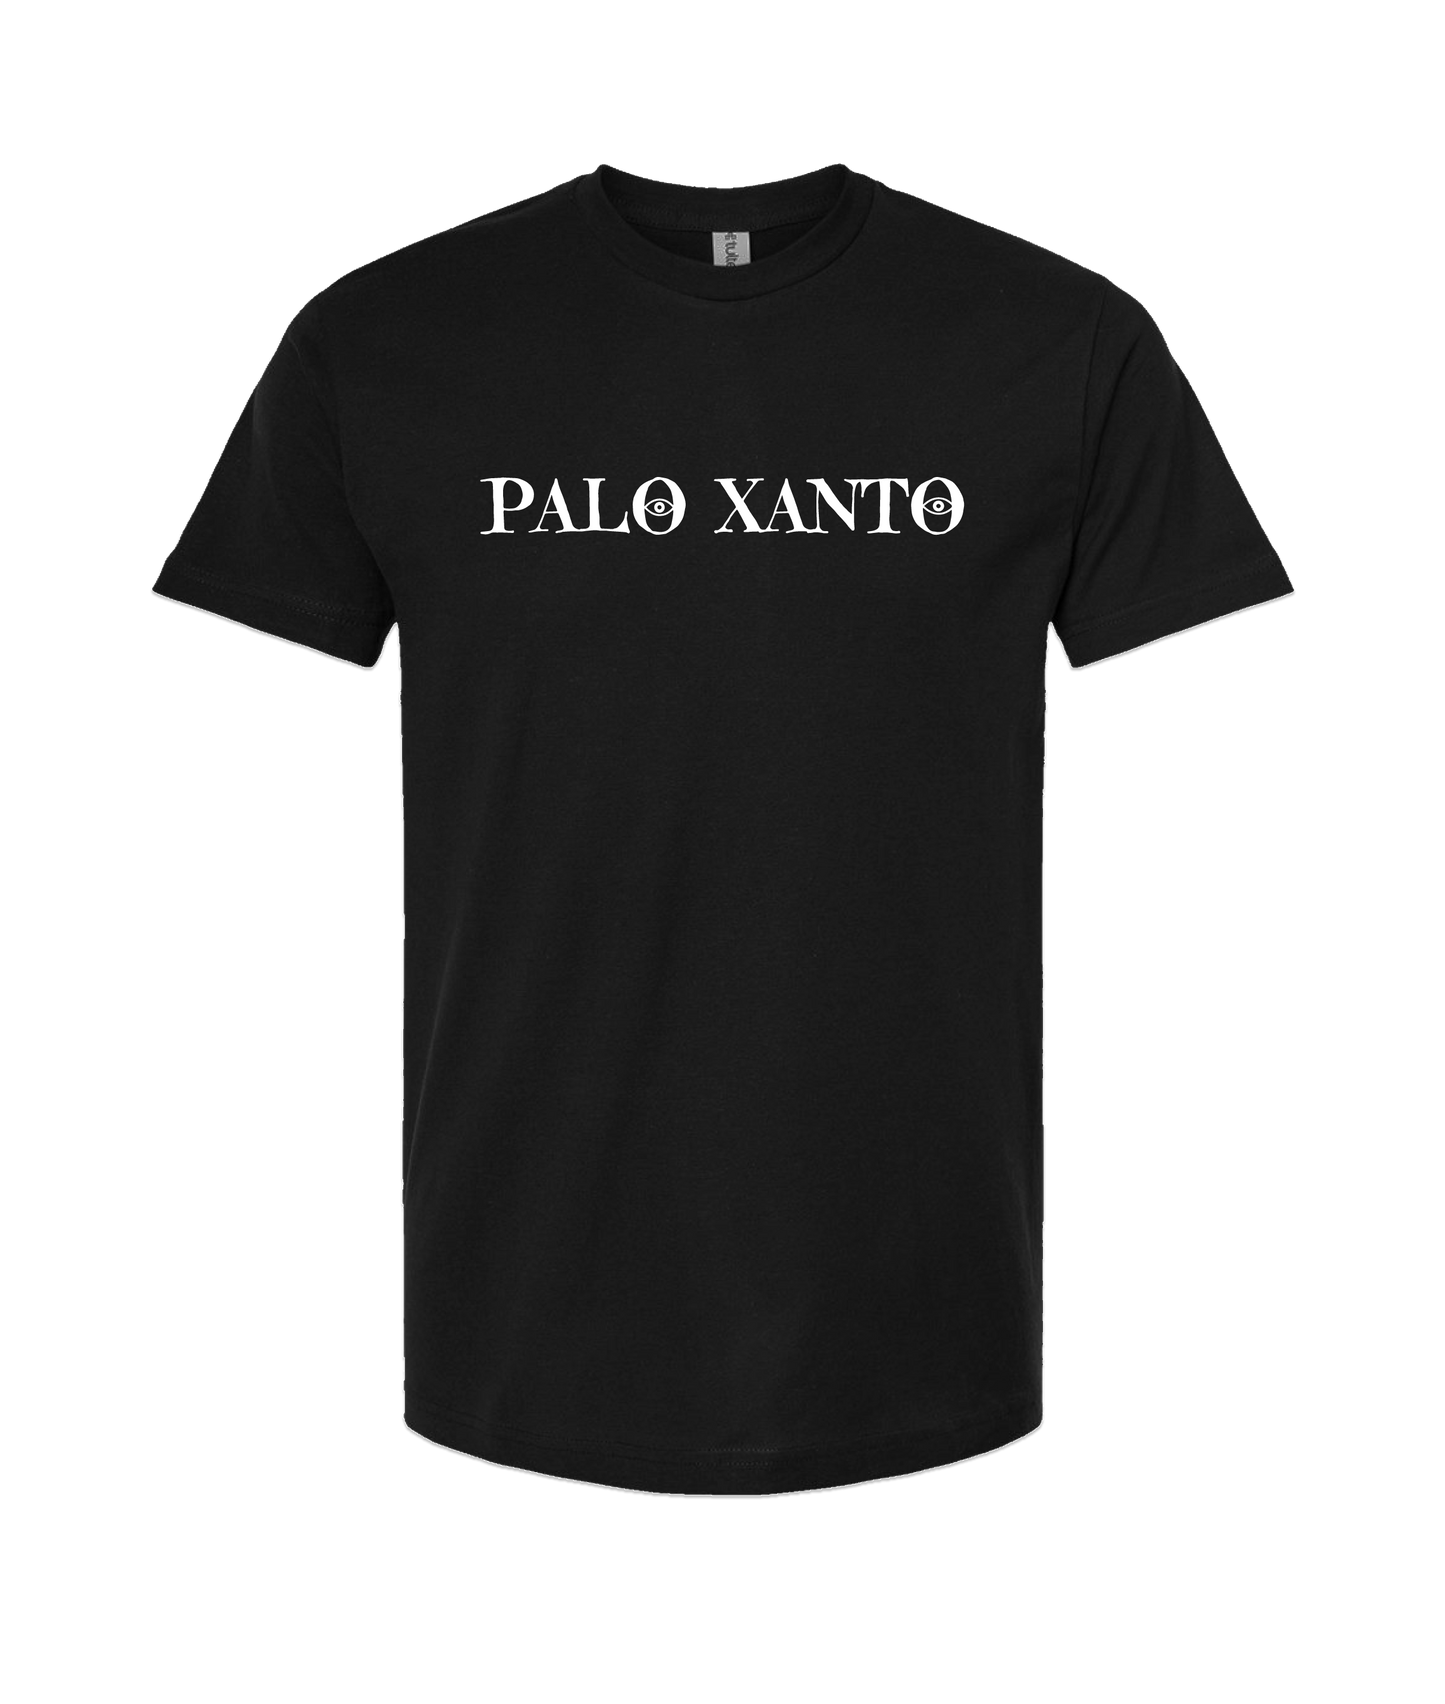 Palo Xanto - Logo - Black T-Shirt